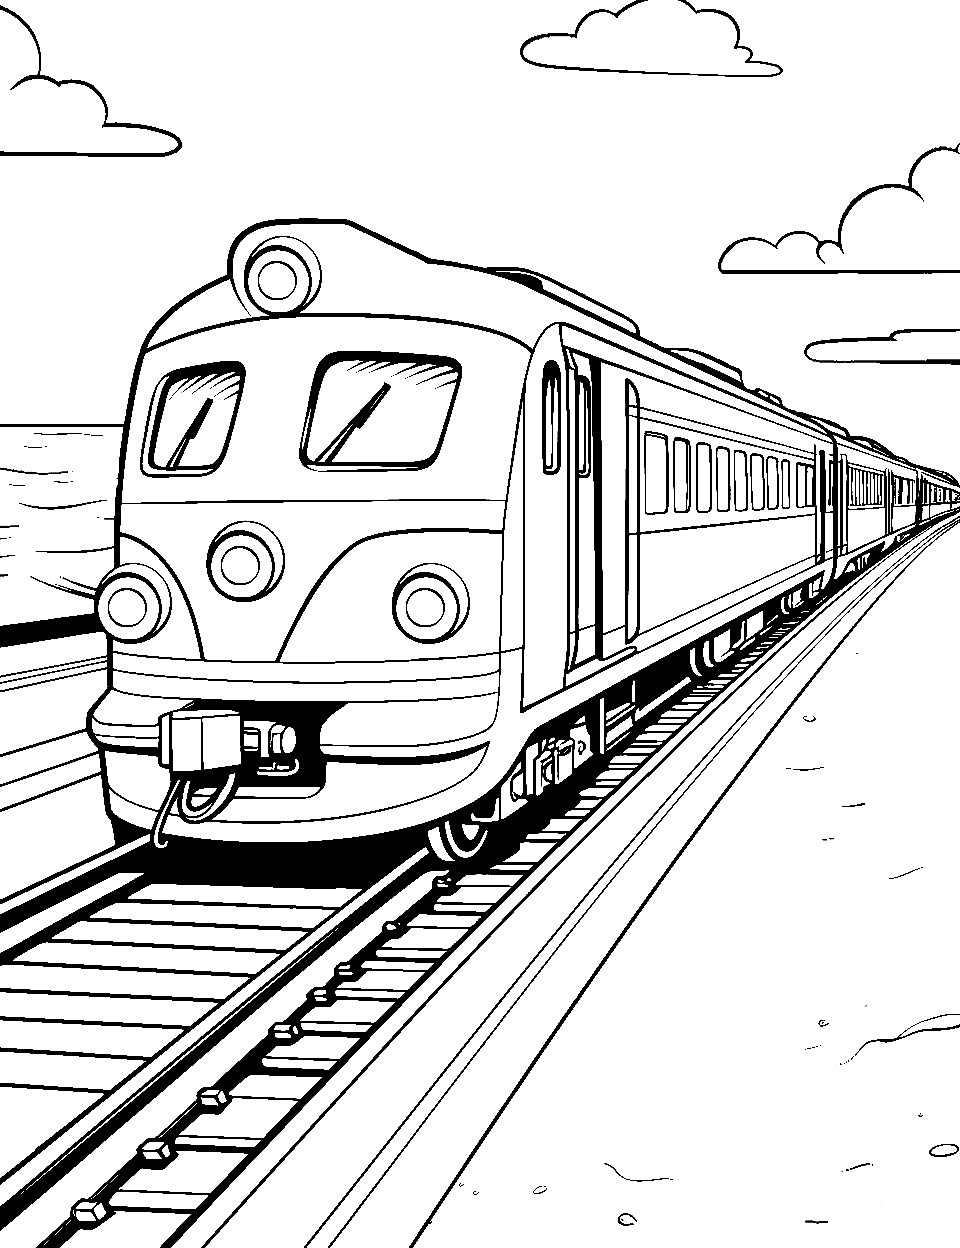 Seaside Scenic Train Coloring Page - A train traveling along a beautiful coastal line.